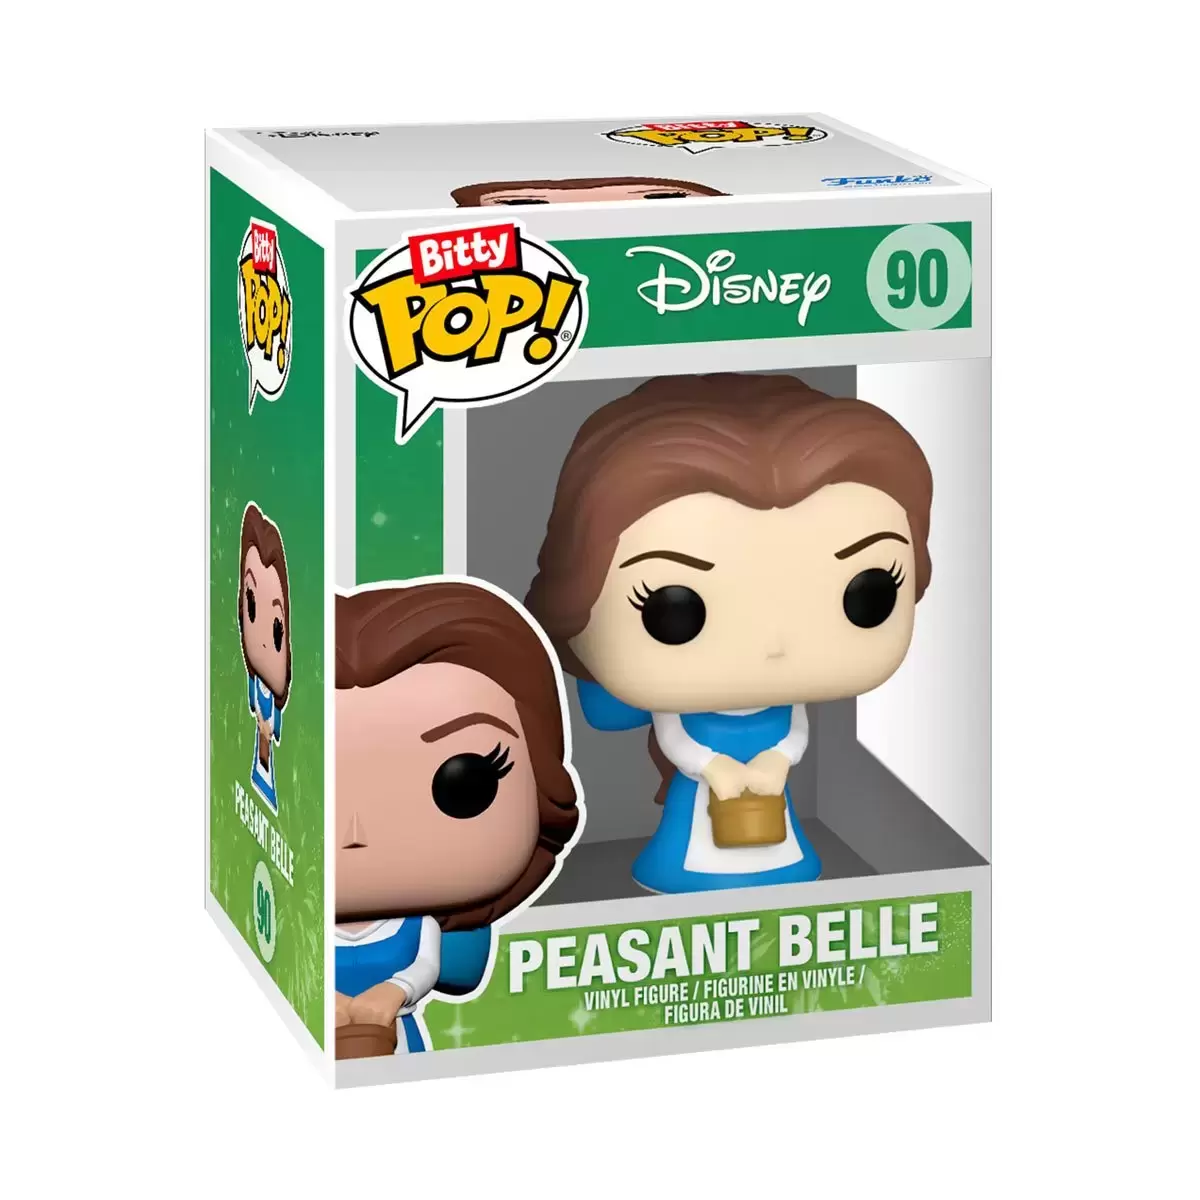 Bitty POP! - Disney Princess - Peasant Belle